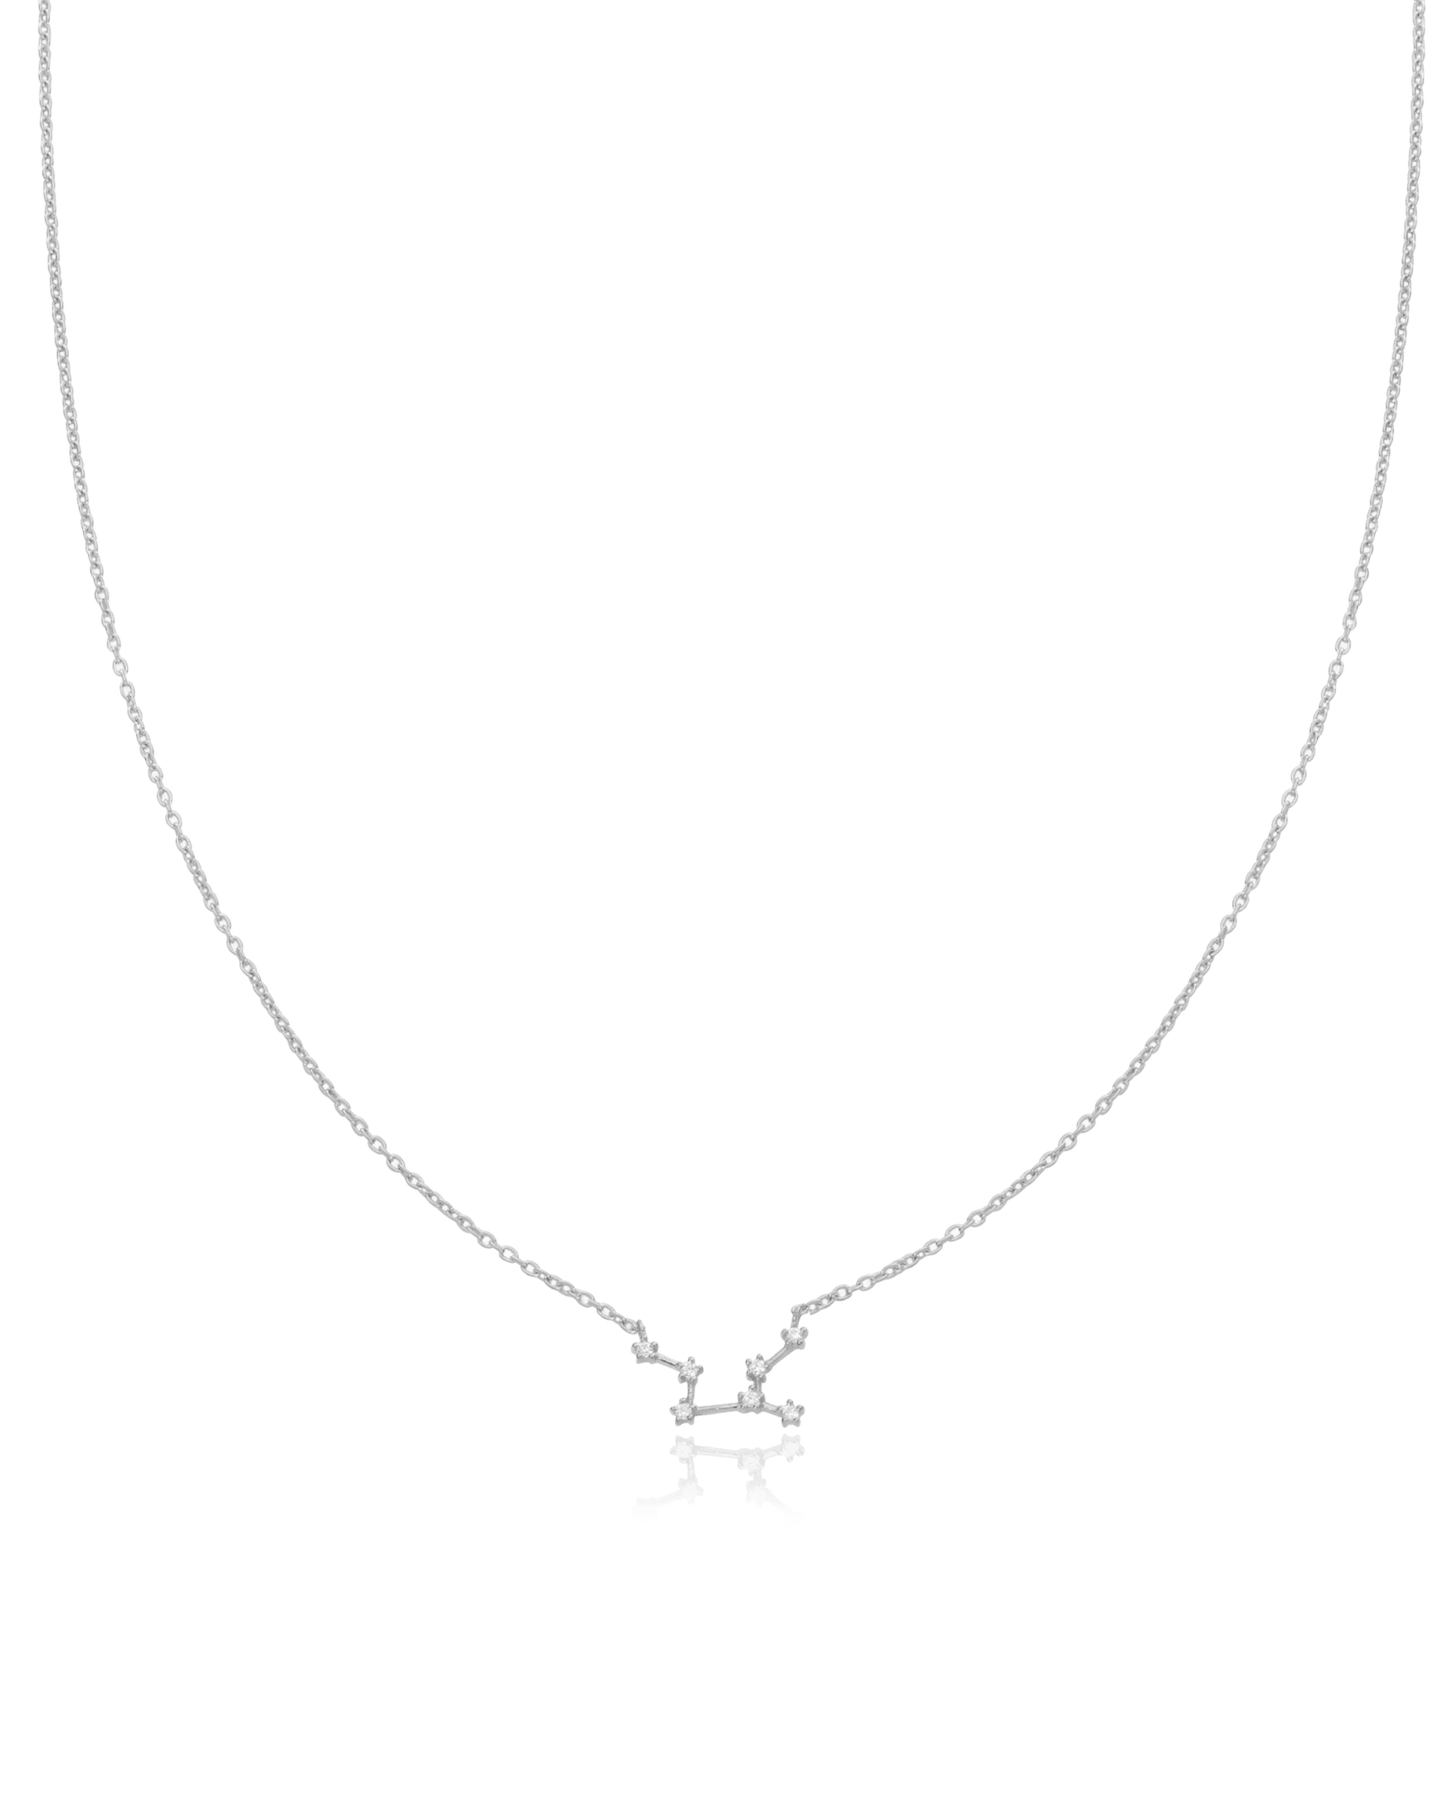 Virgo Constellation Necklace - 18K Gold Vermeil Necklaces magal-dev 